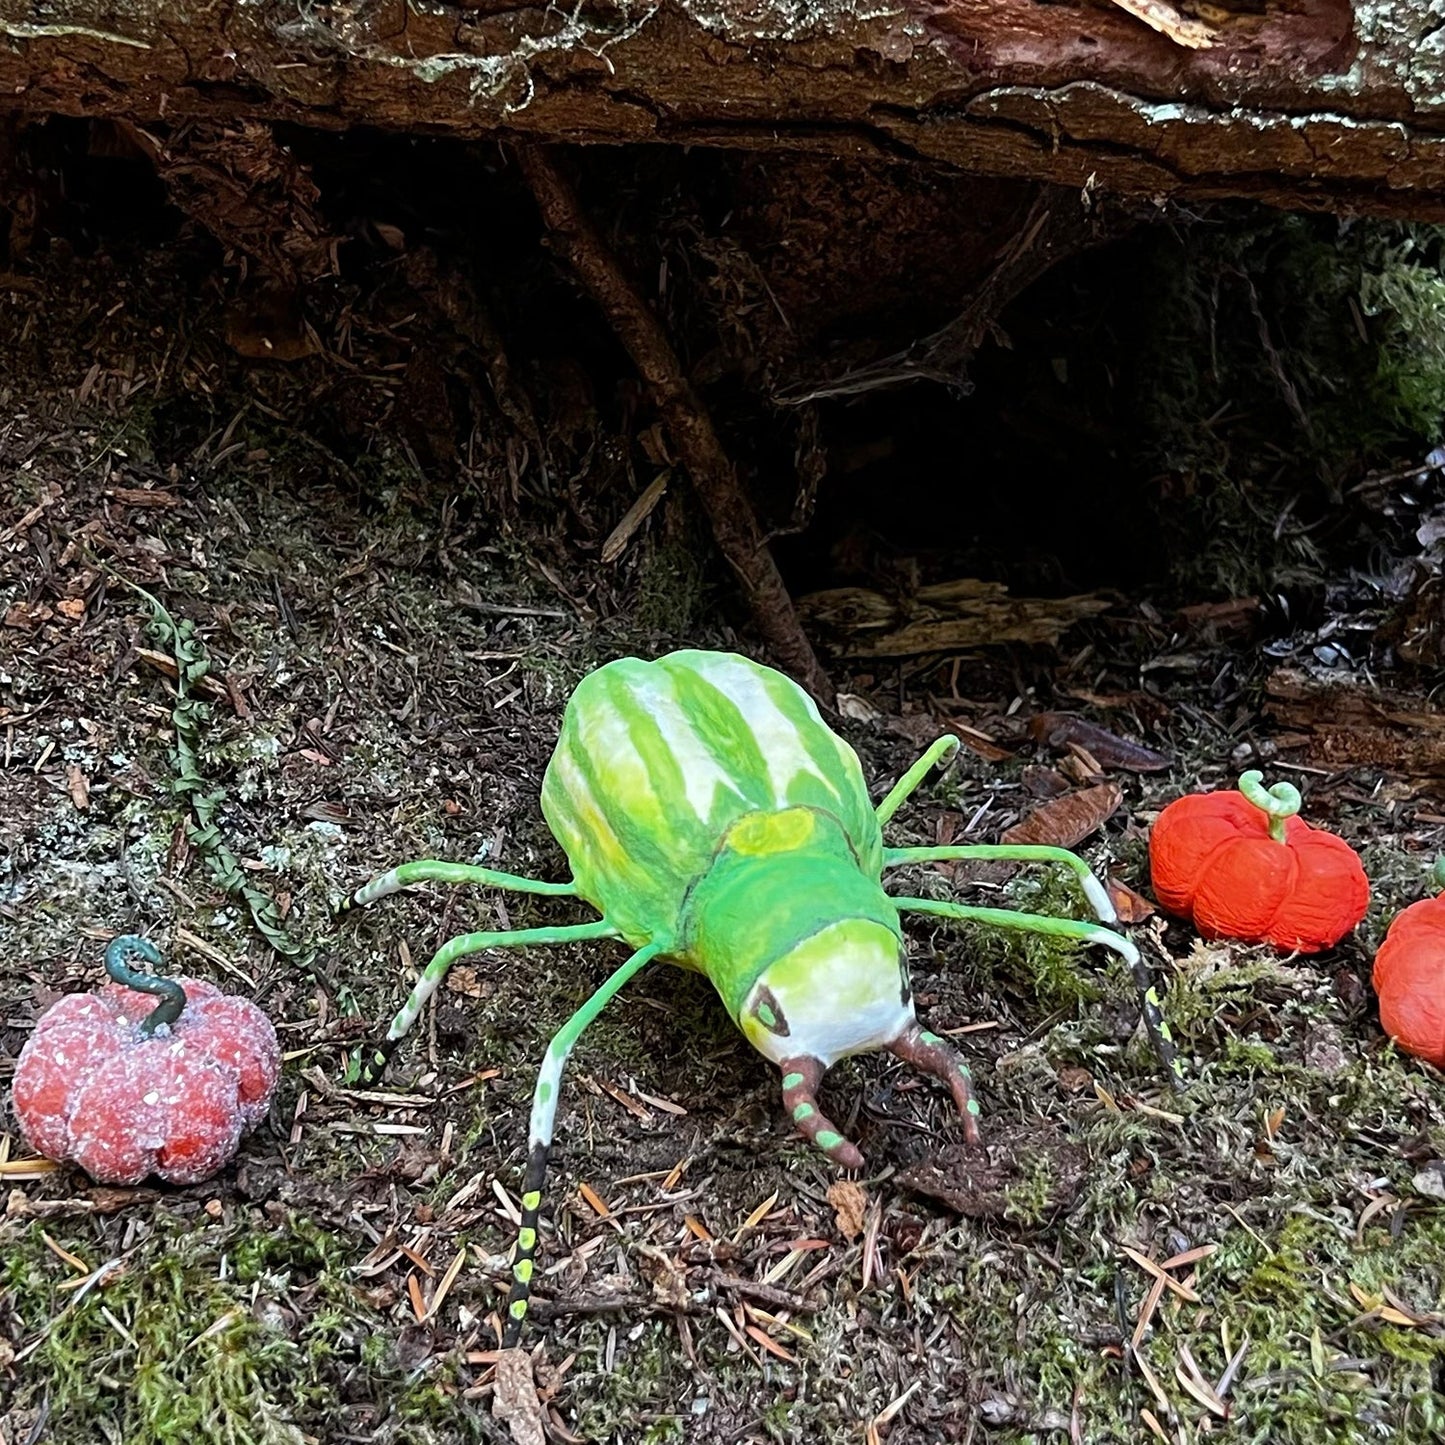 Handmade Spun Cotton Beetle Figurine